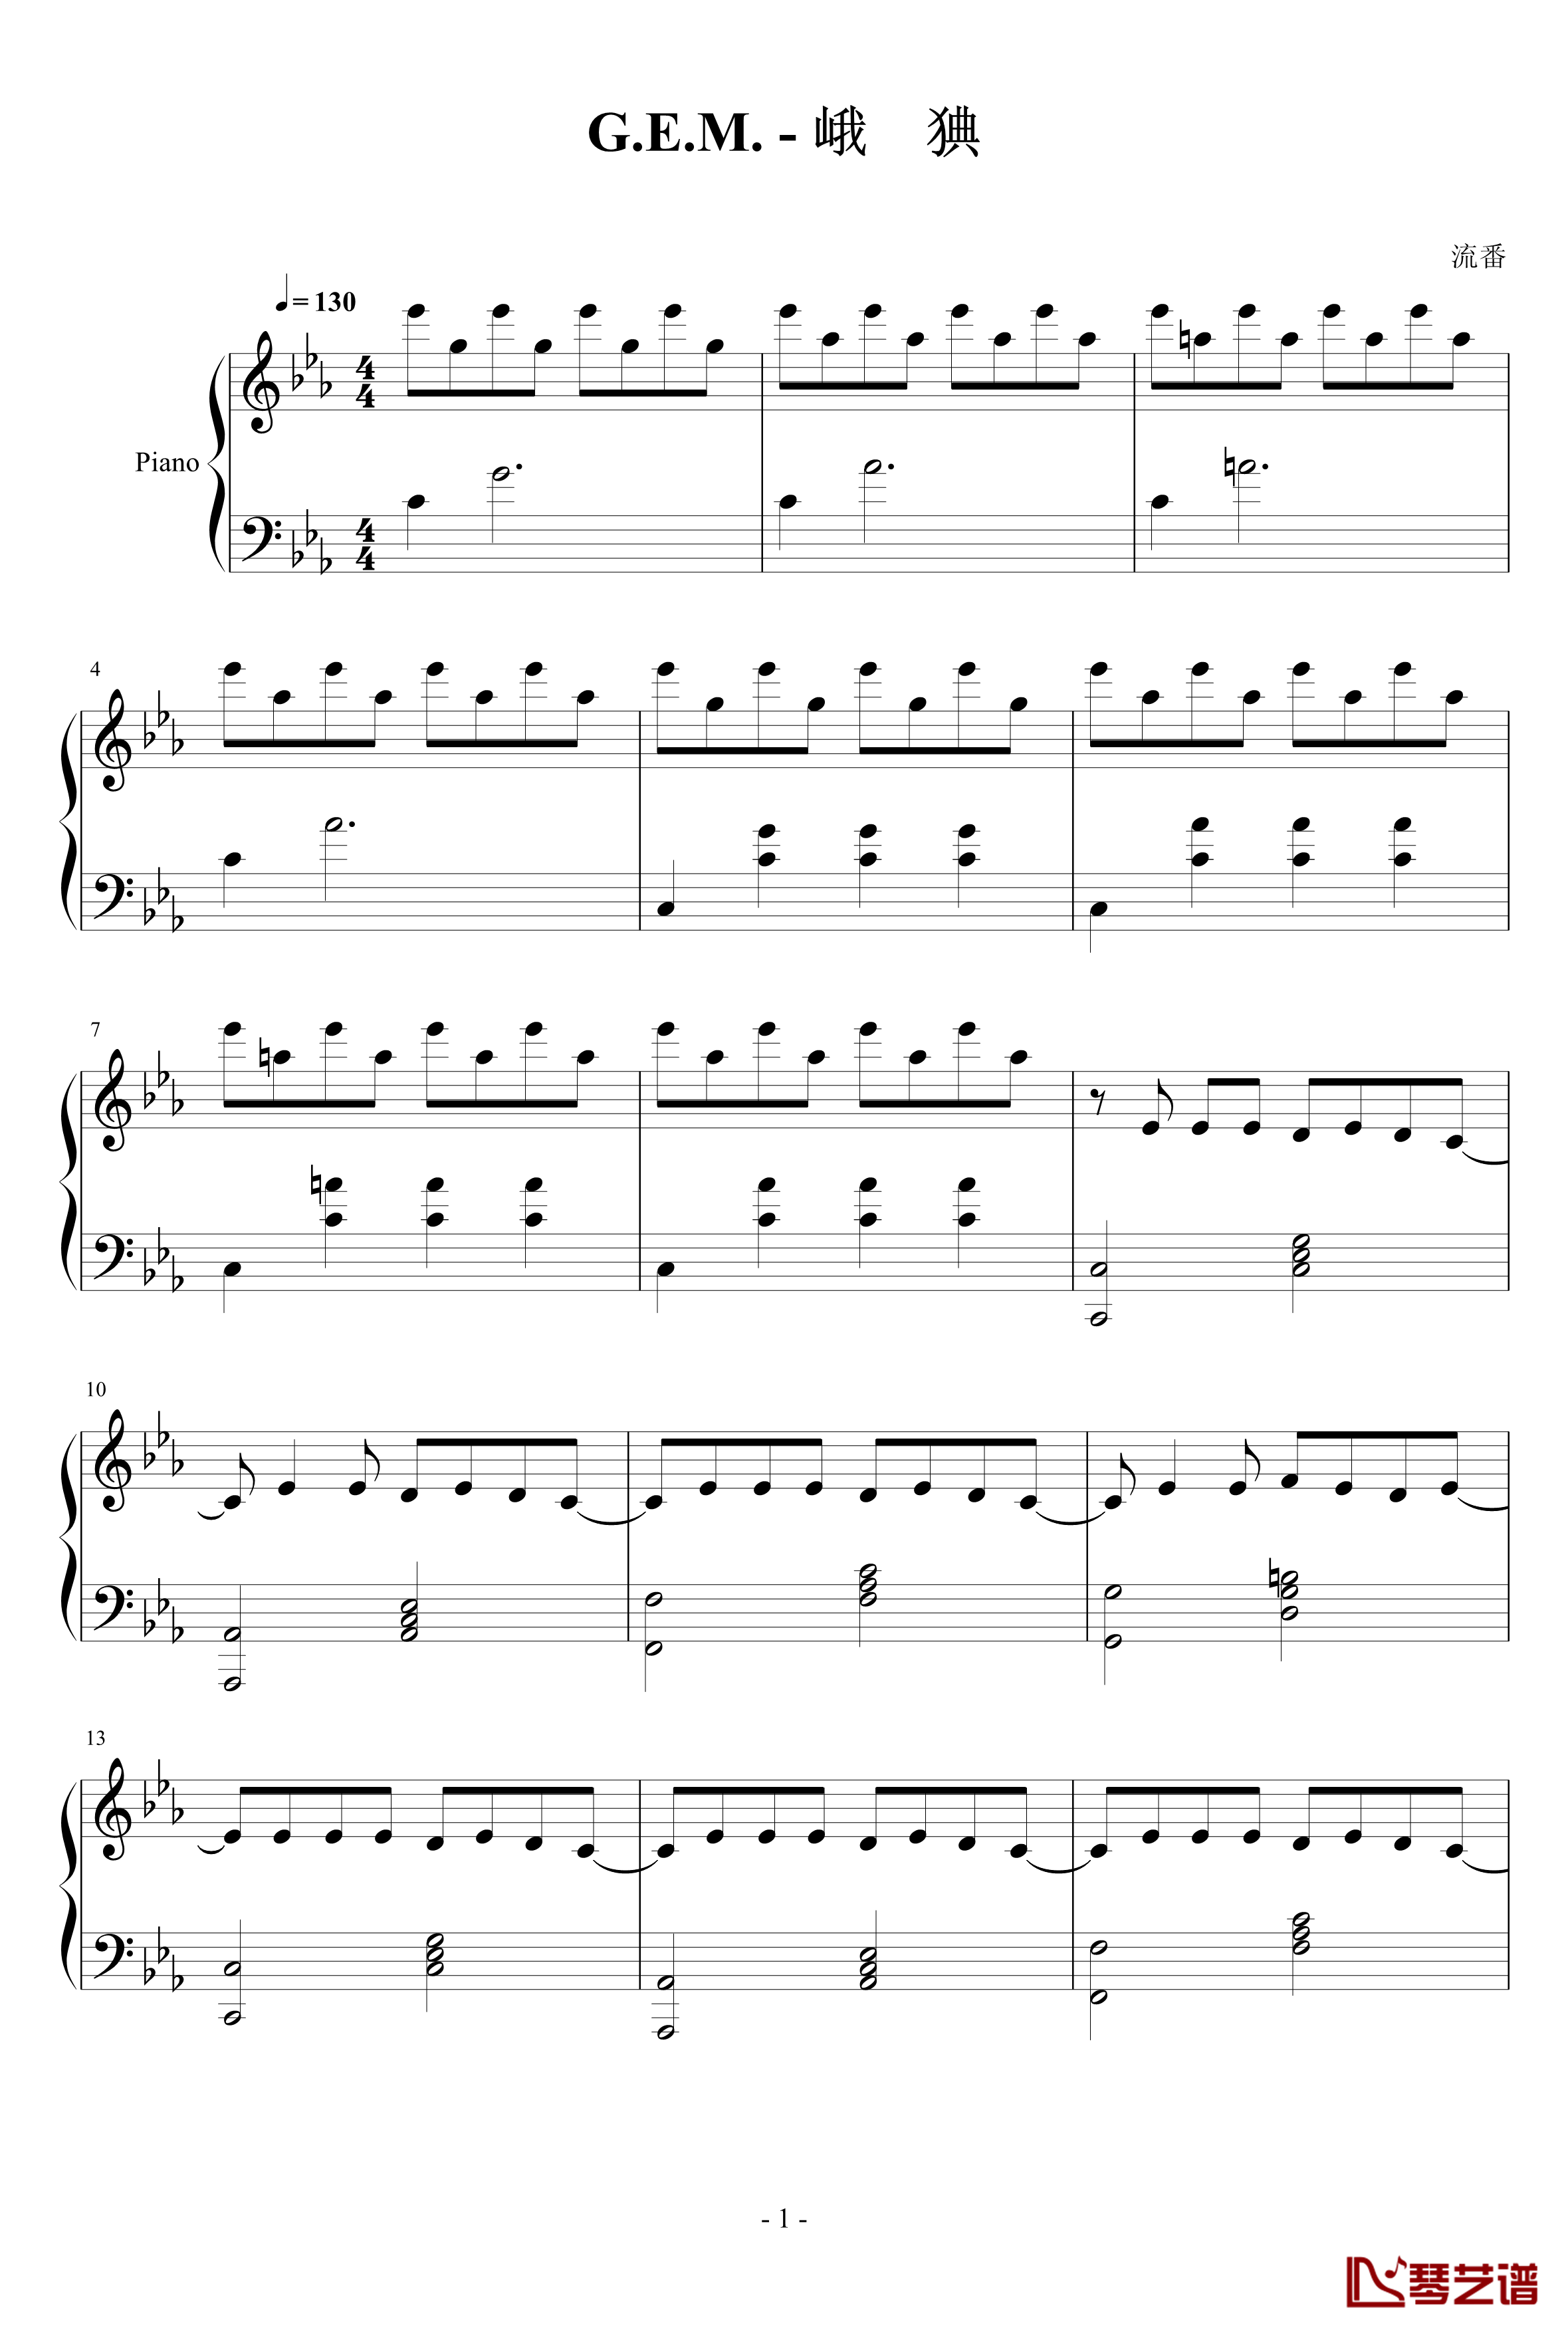 G.E.M.钢琴谱 - 塞納河-chk9181